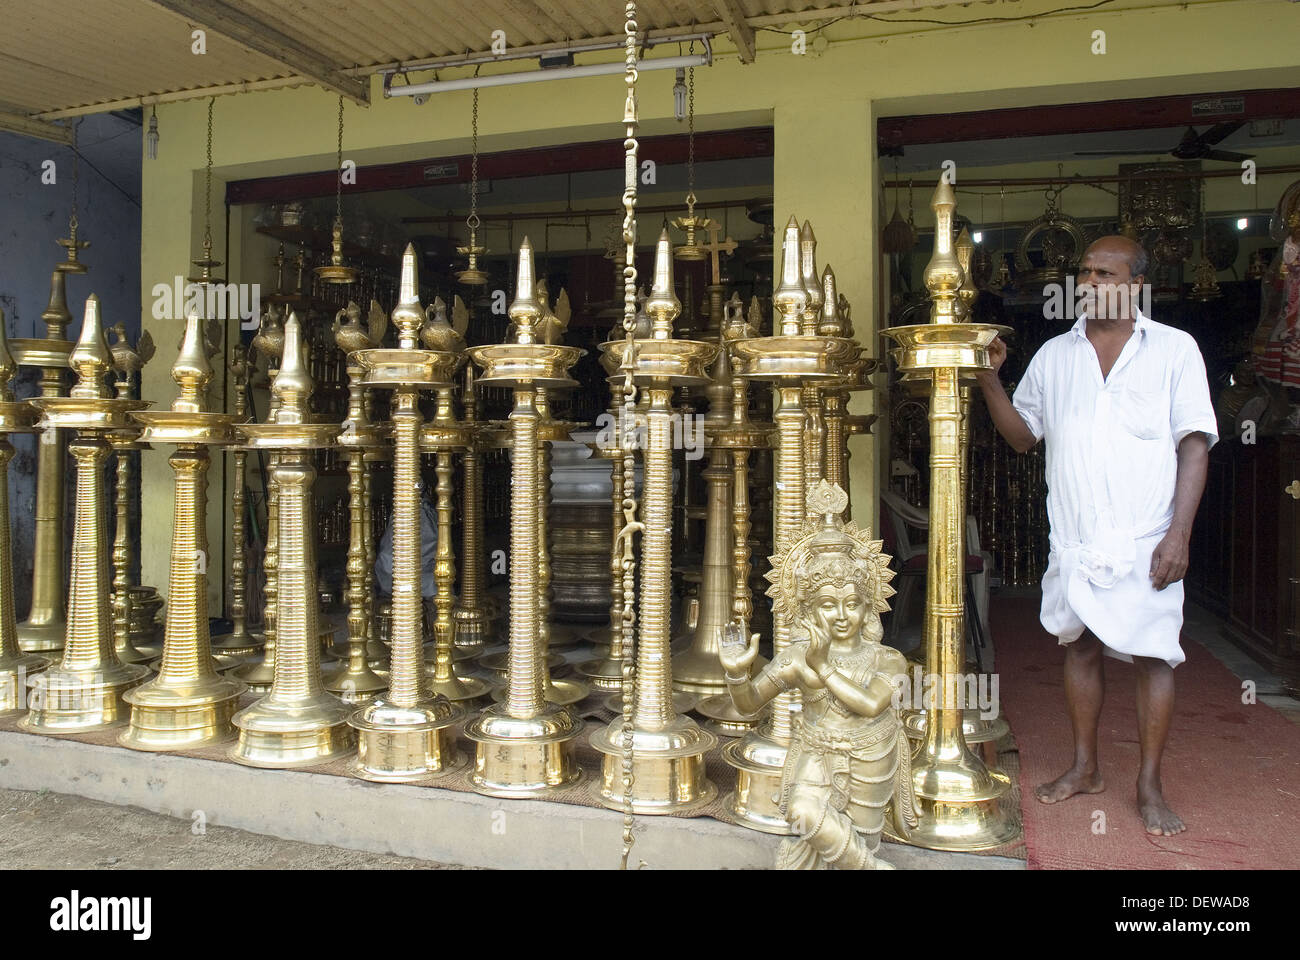 https://c8.alamy.com/comp/DEWAD8/brass-oil-lamps-shop-at-mannar-kerala-india-DEWAD8.jpg